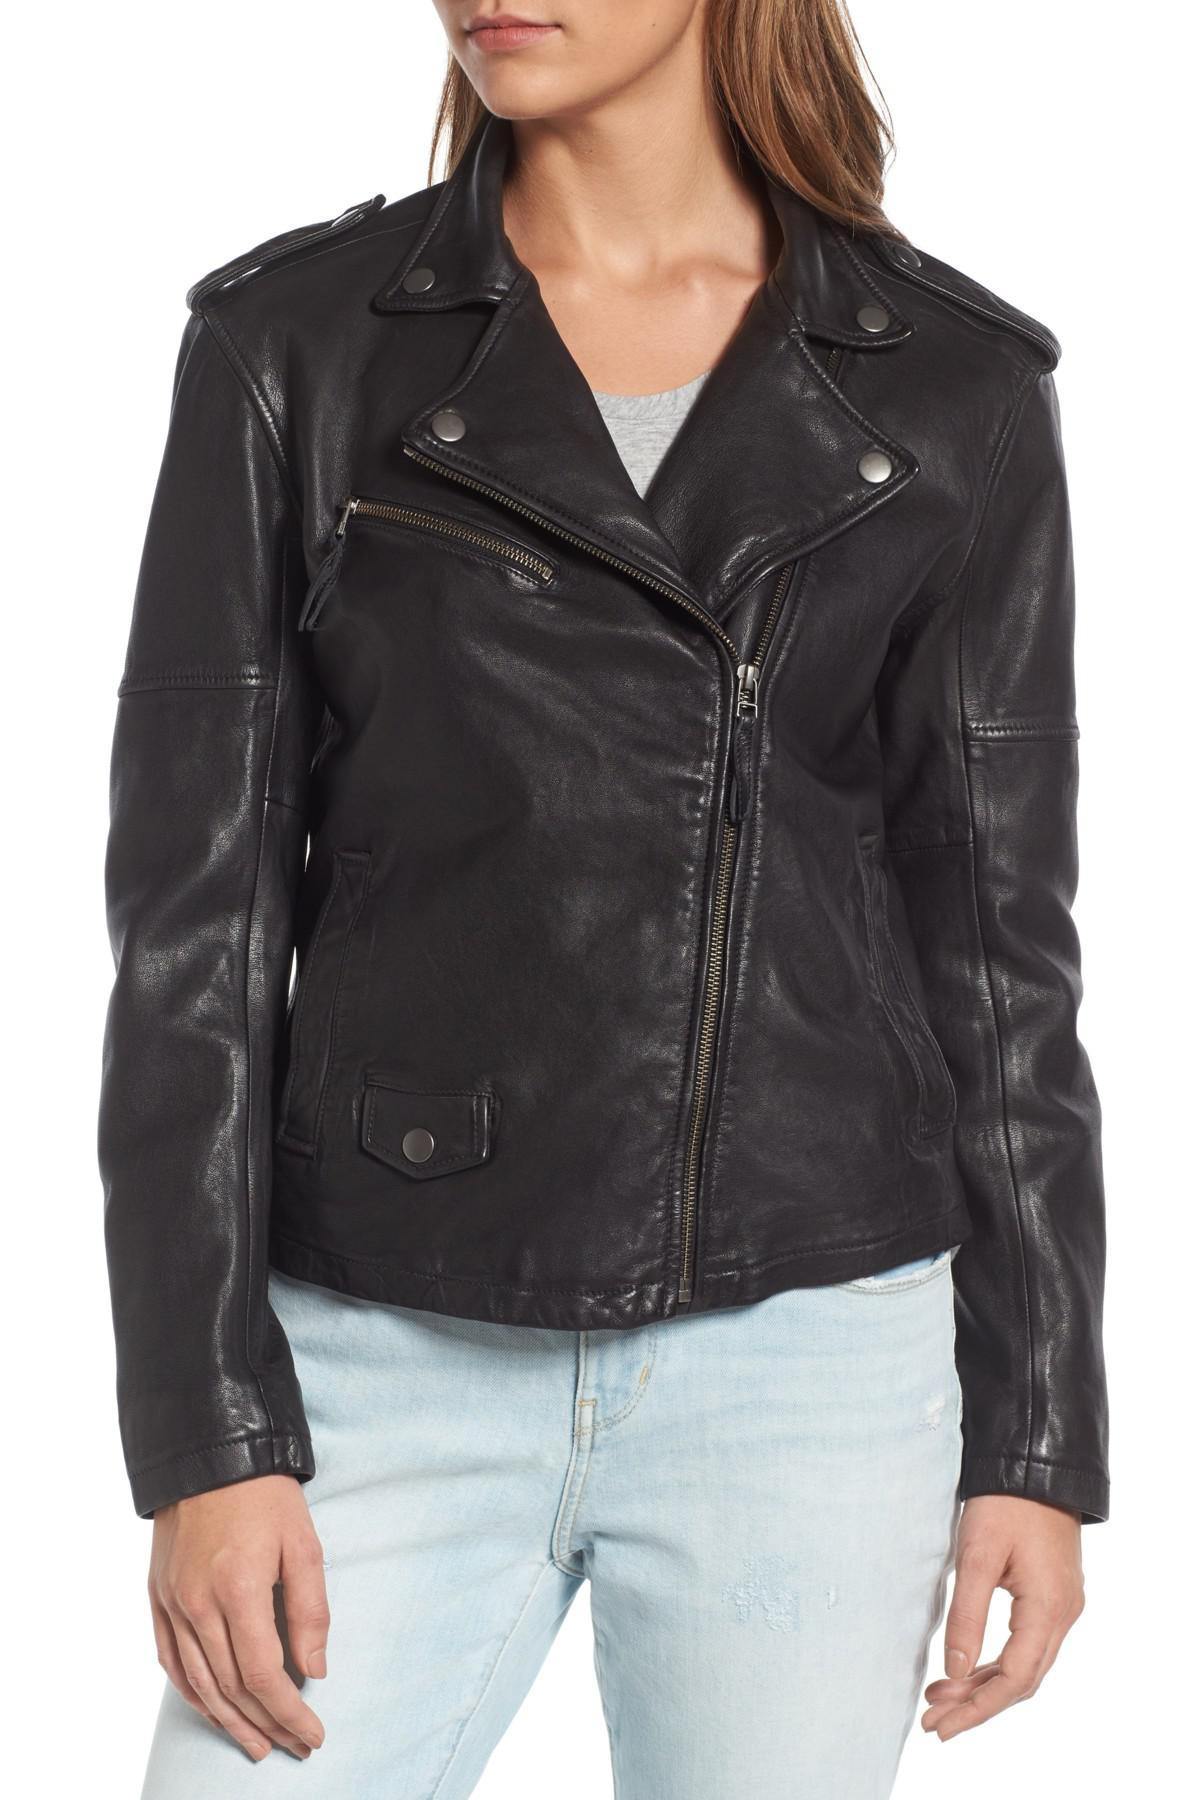 Treasure & Bond Leather Moto Jacket in Black - Lyst